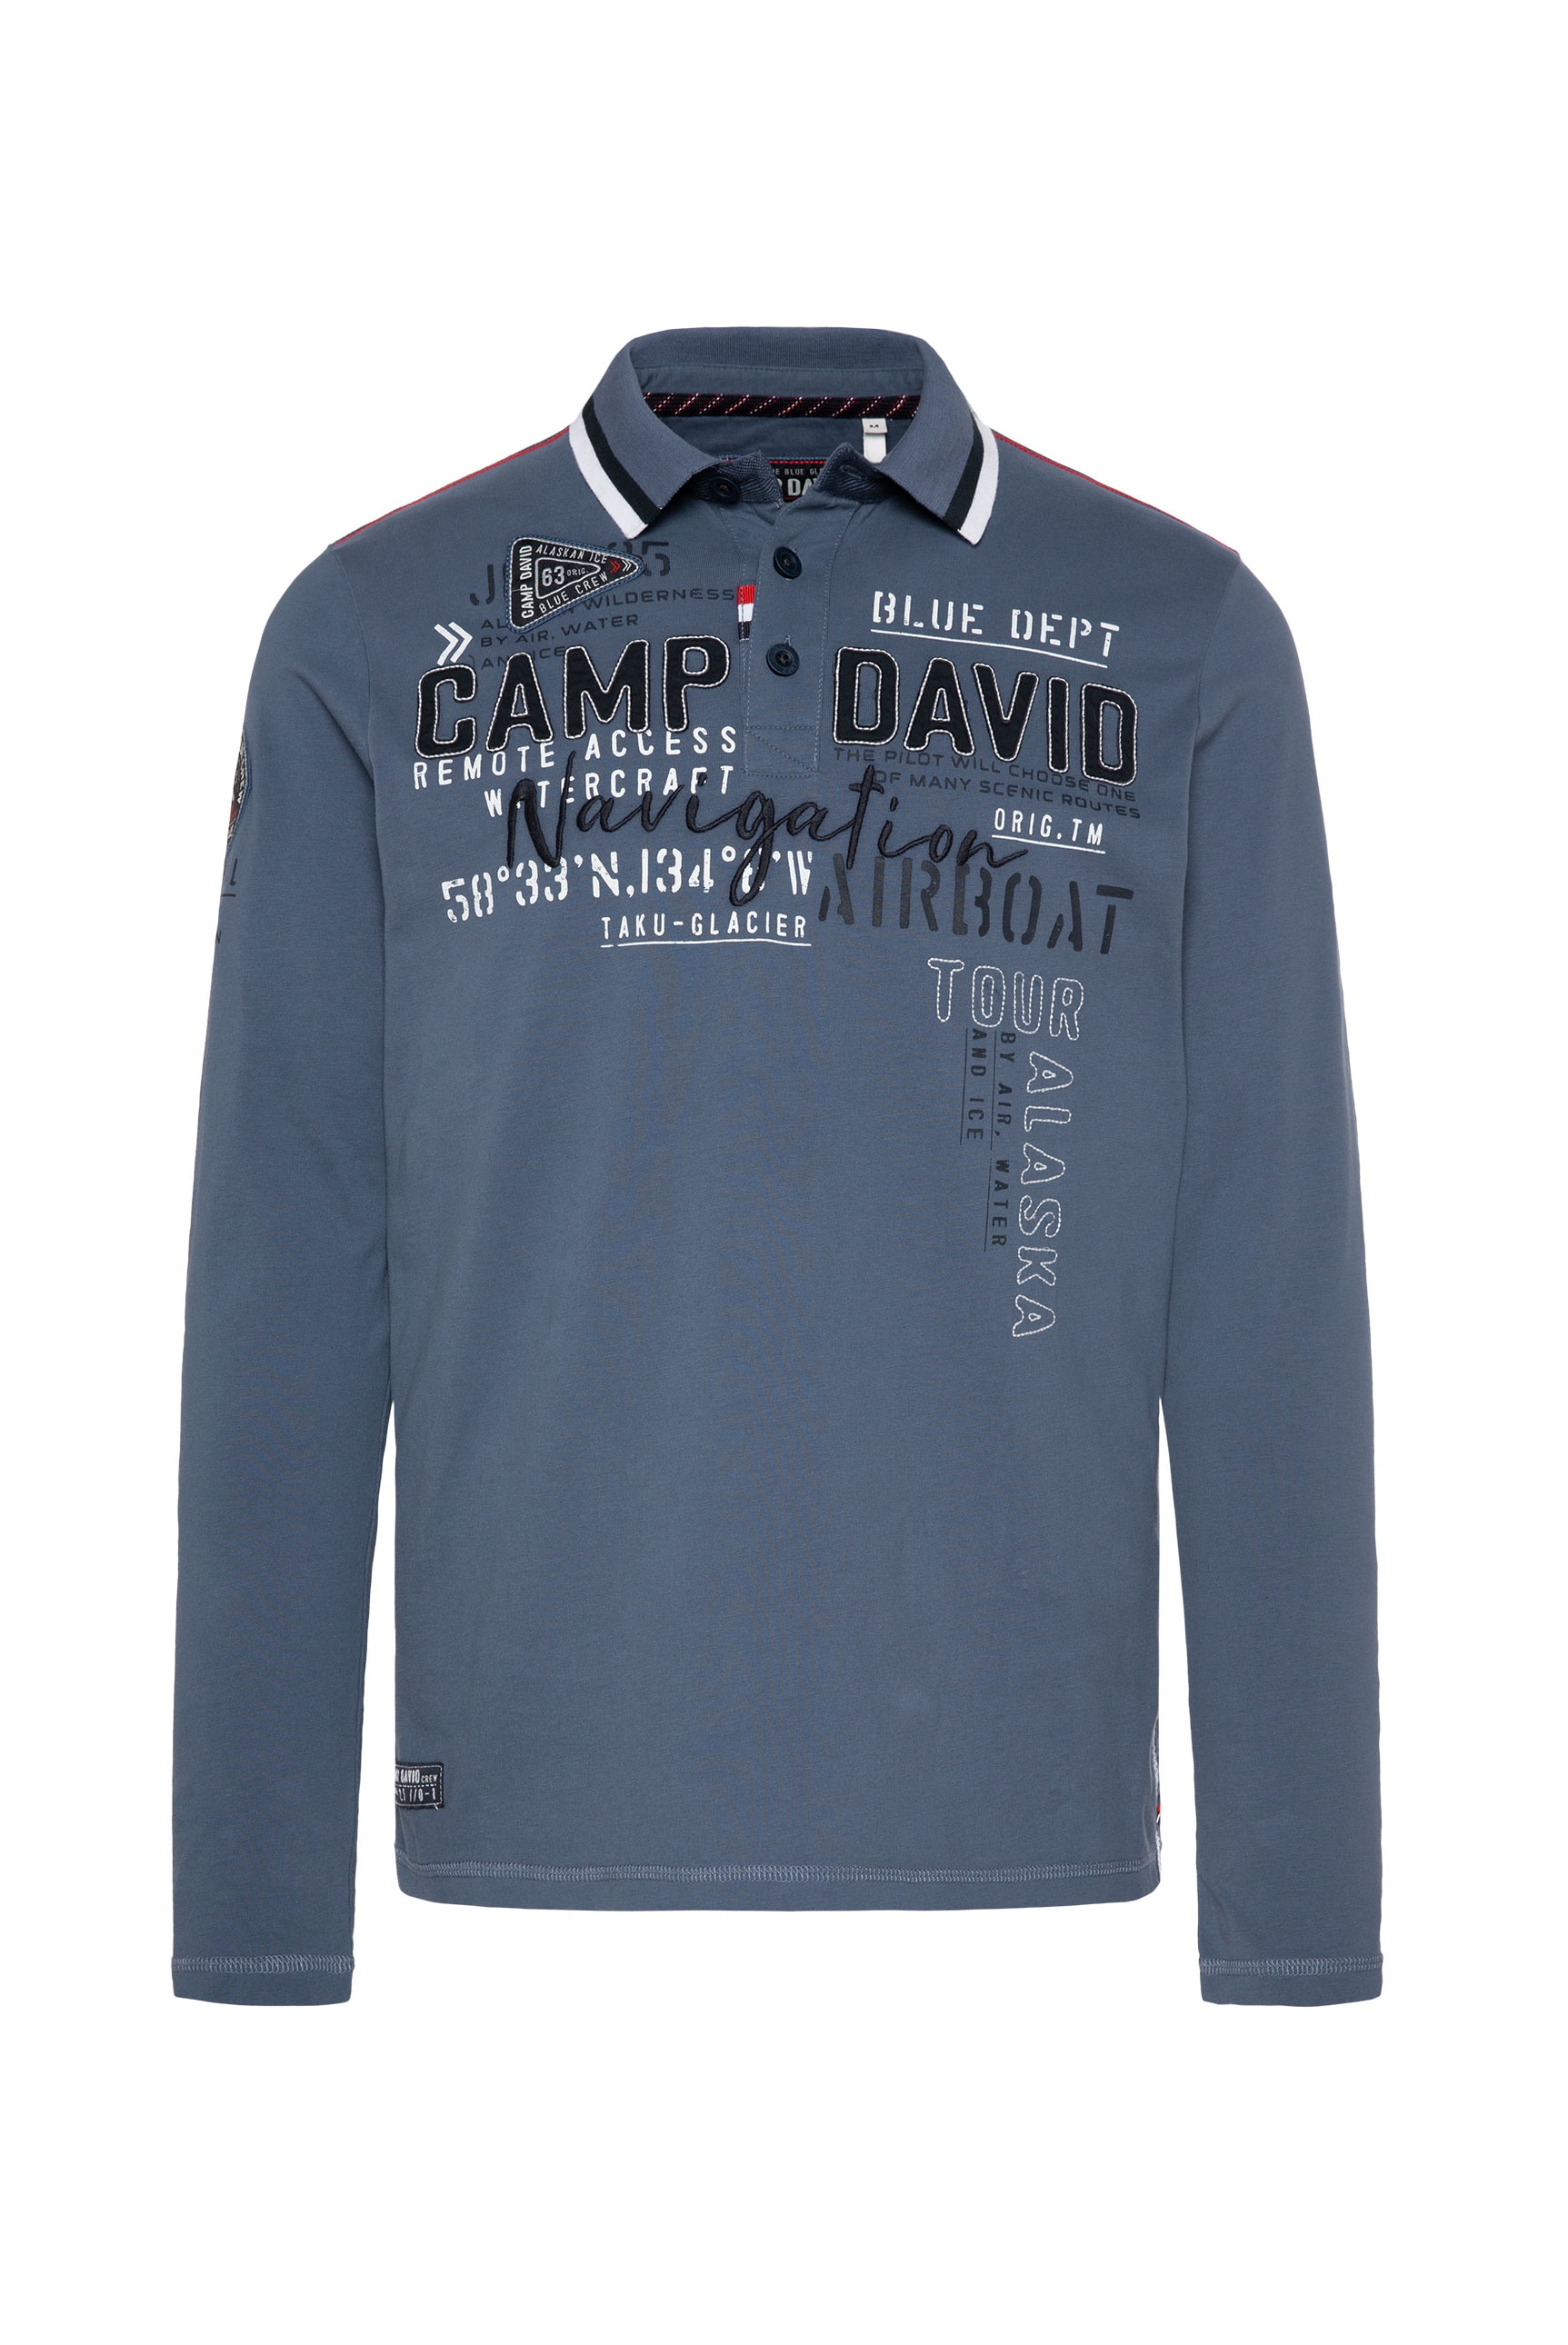 CAMP DAVID Langarm-Poloshirt, mit Logo-Applikationen